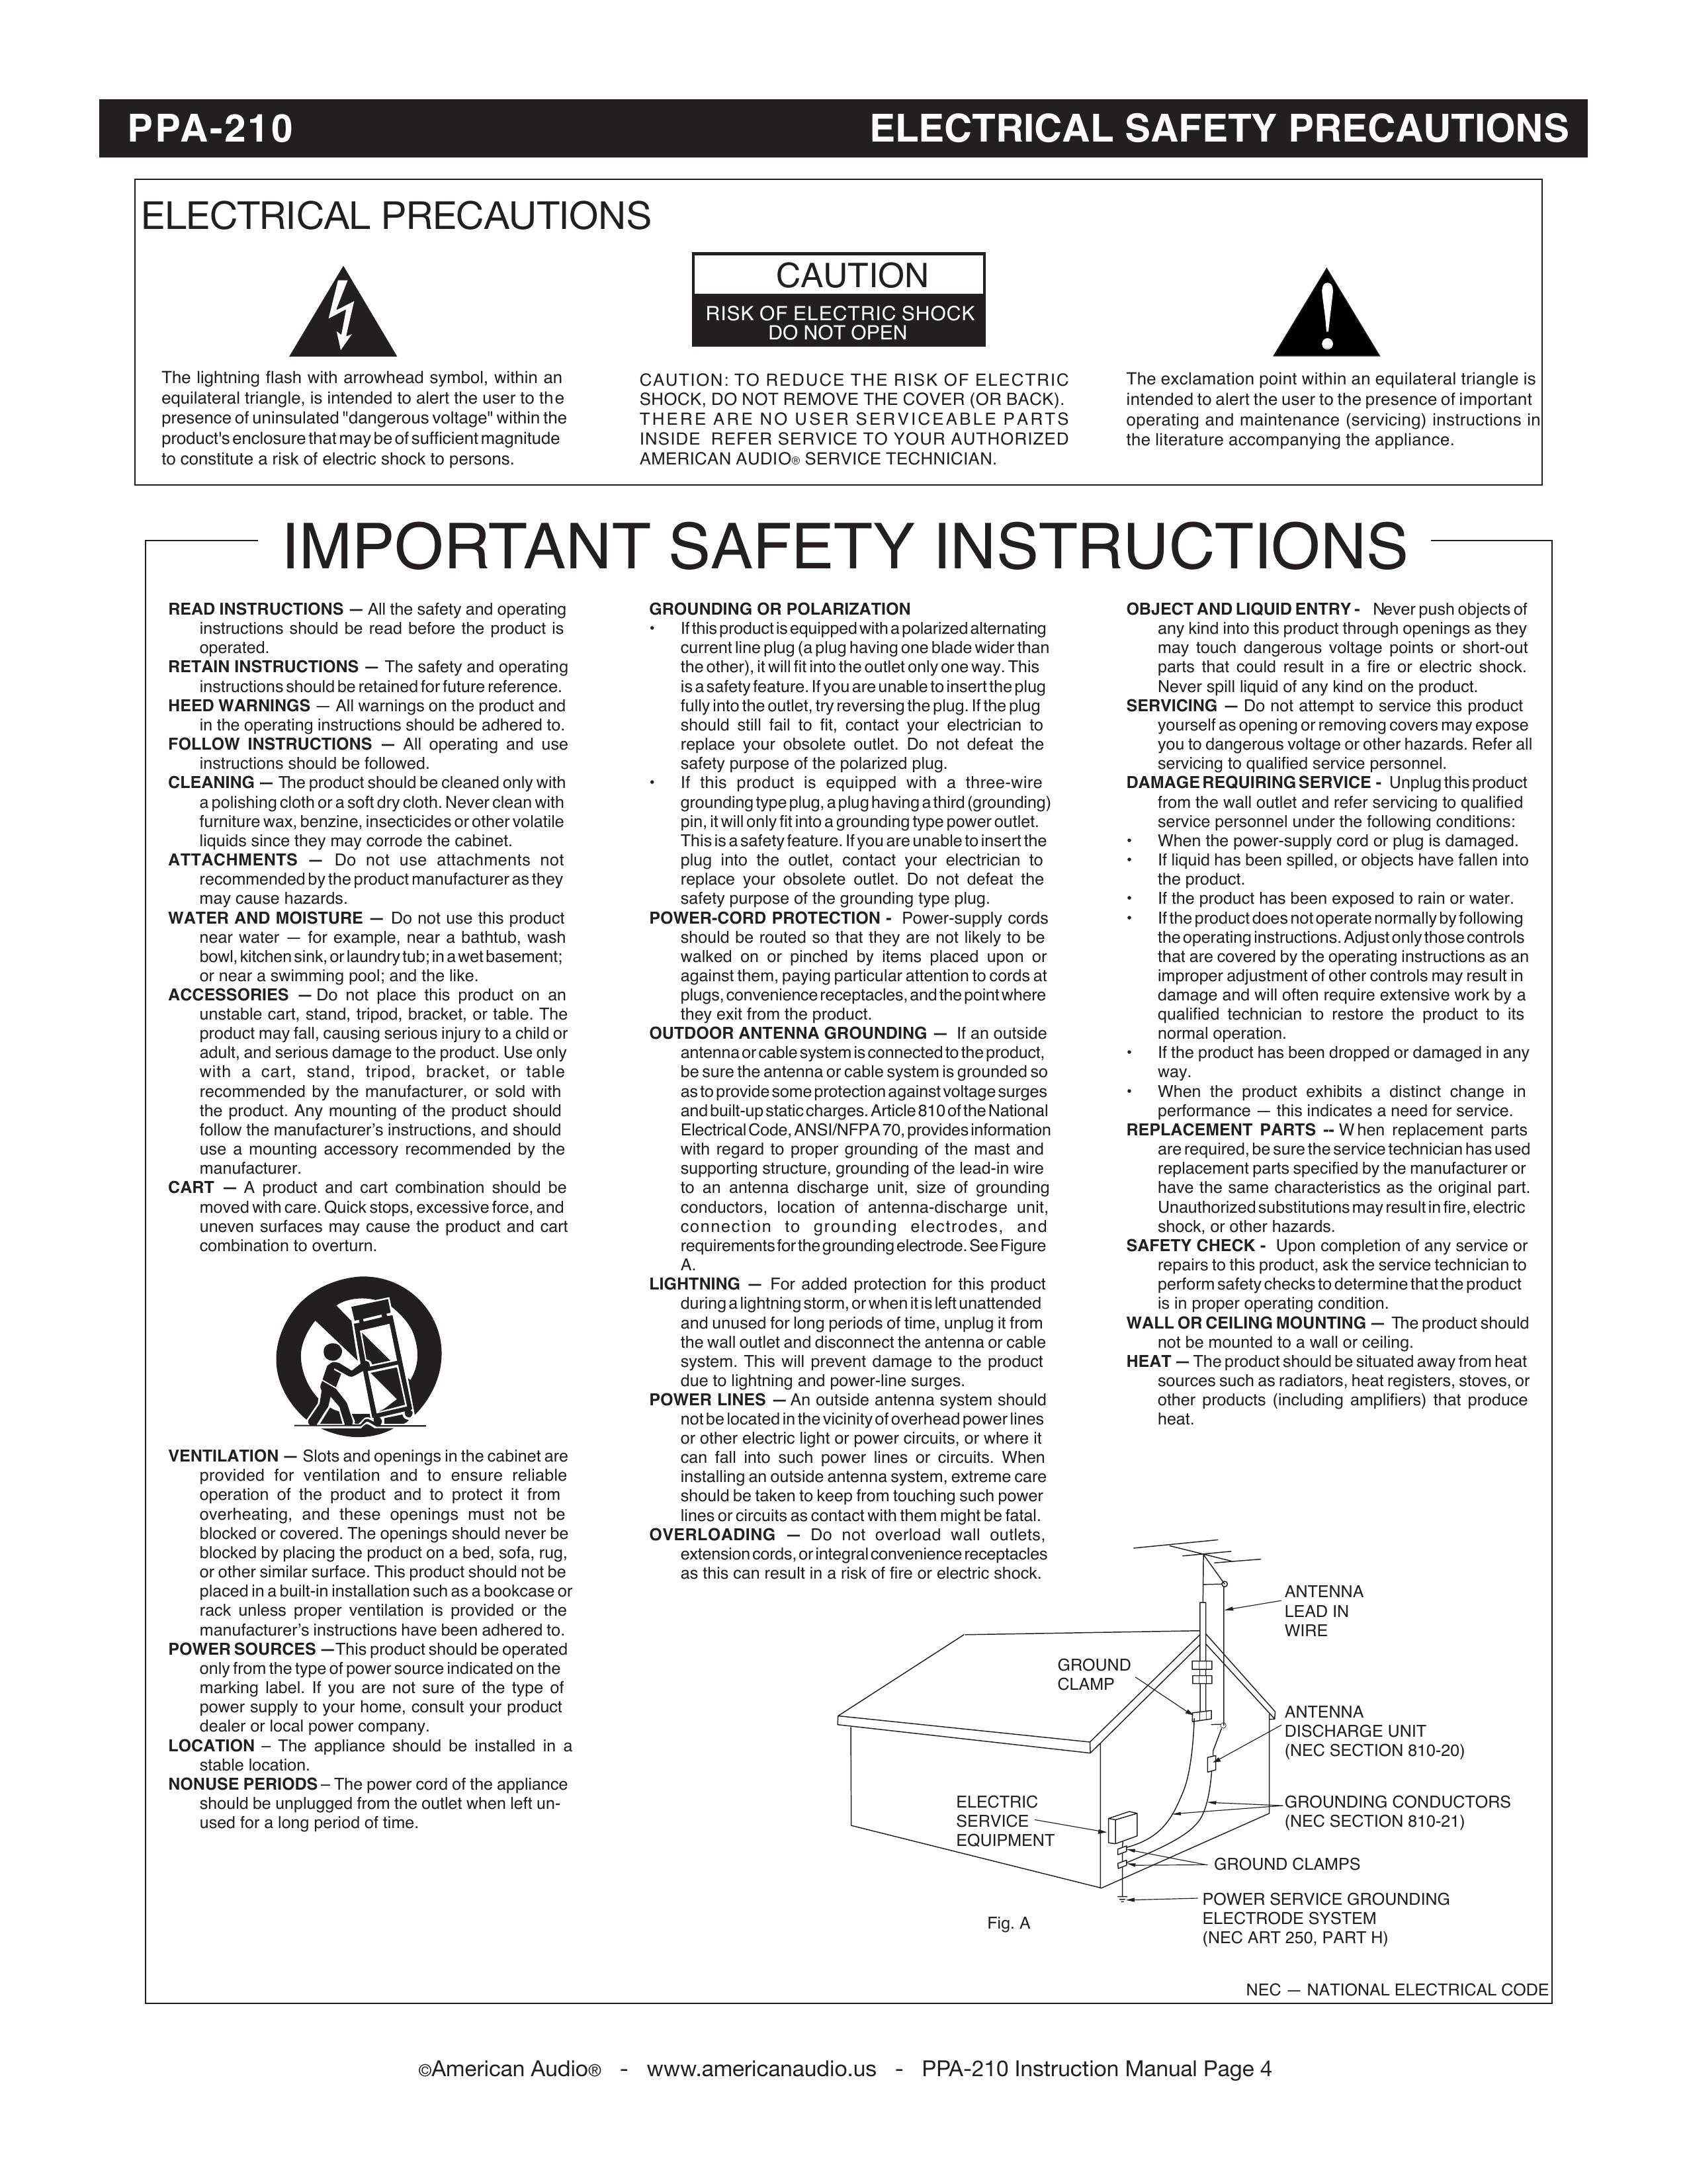 American Audio PPA-210 DJ Equipment User Manual (Page 4)